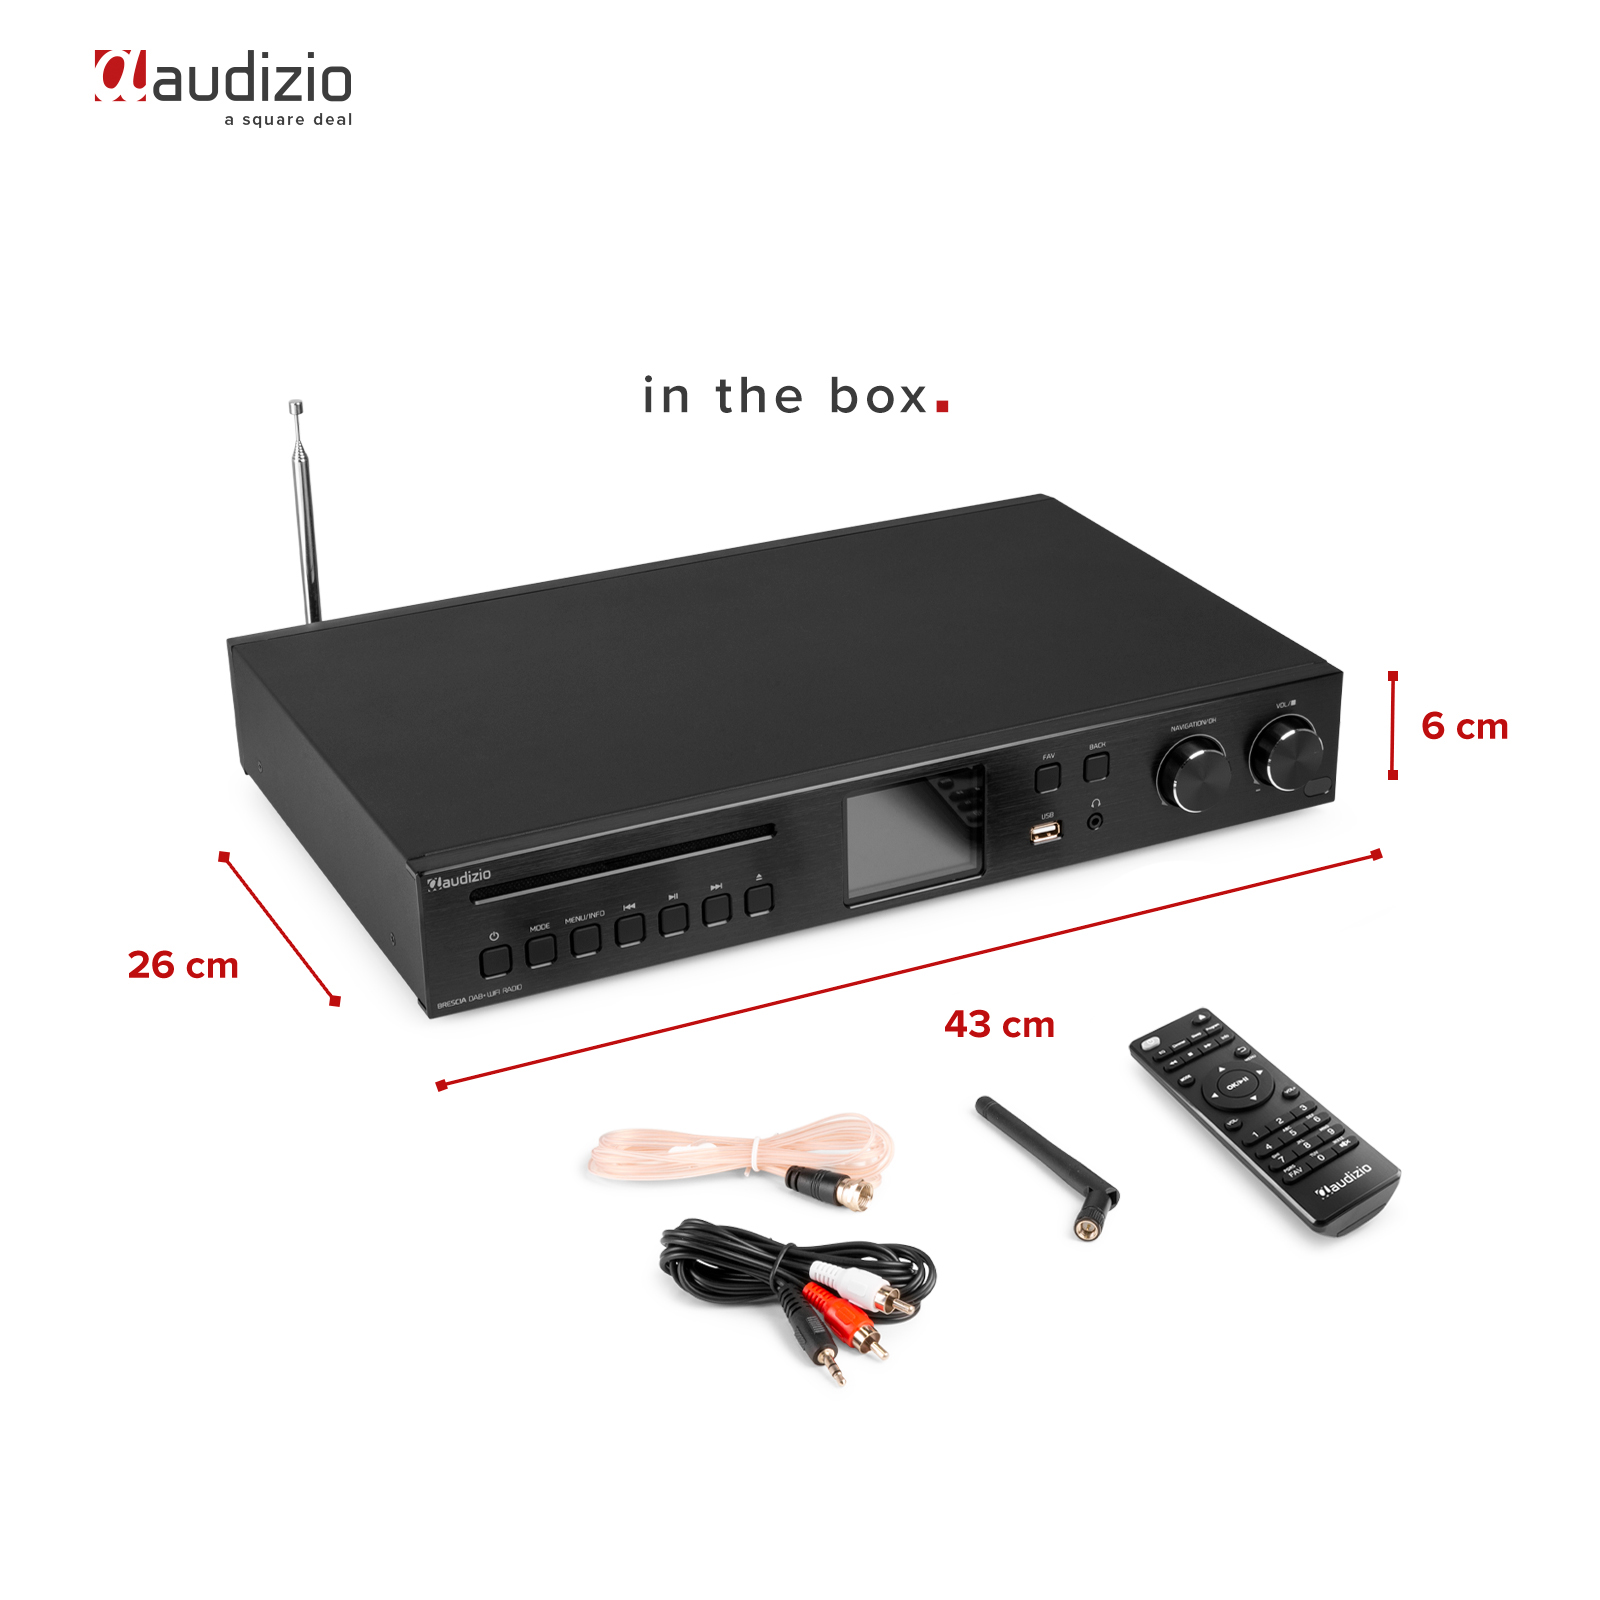 AUDIZIO BRESCIA BLACK Ενισχυτής με Ιnternet / DAB / FM Radio, Bluetooth, WiFi, Spotify, CD player, MP3 (102.270)